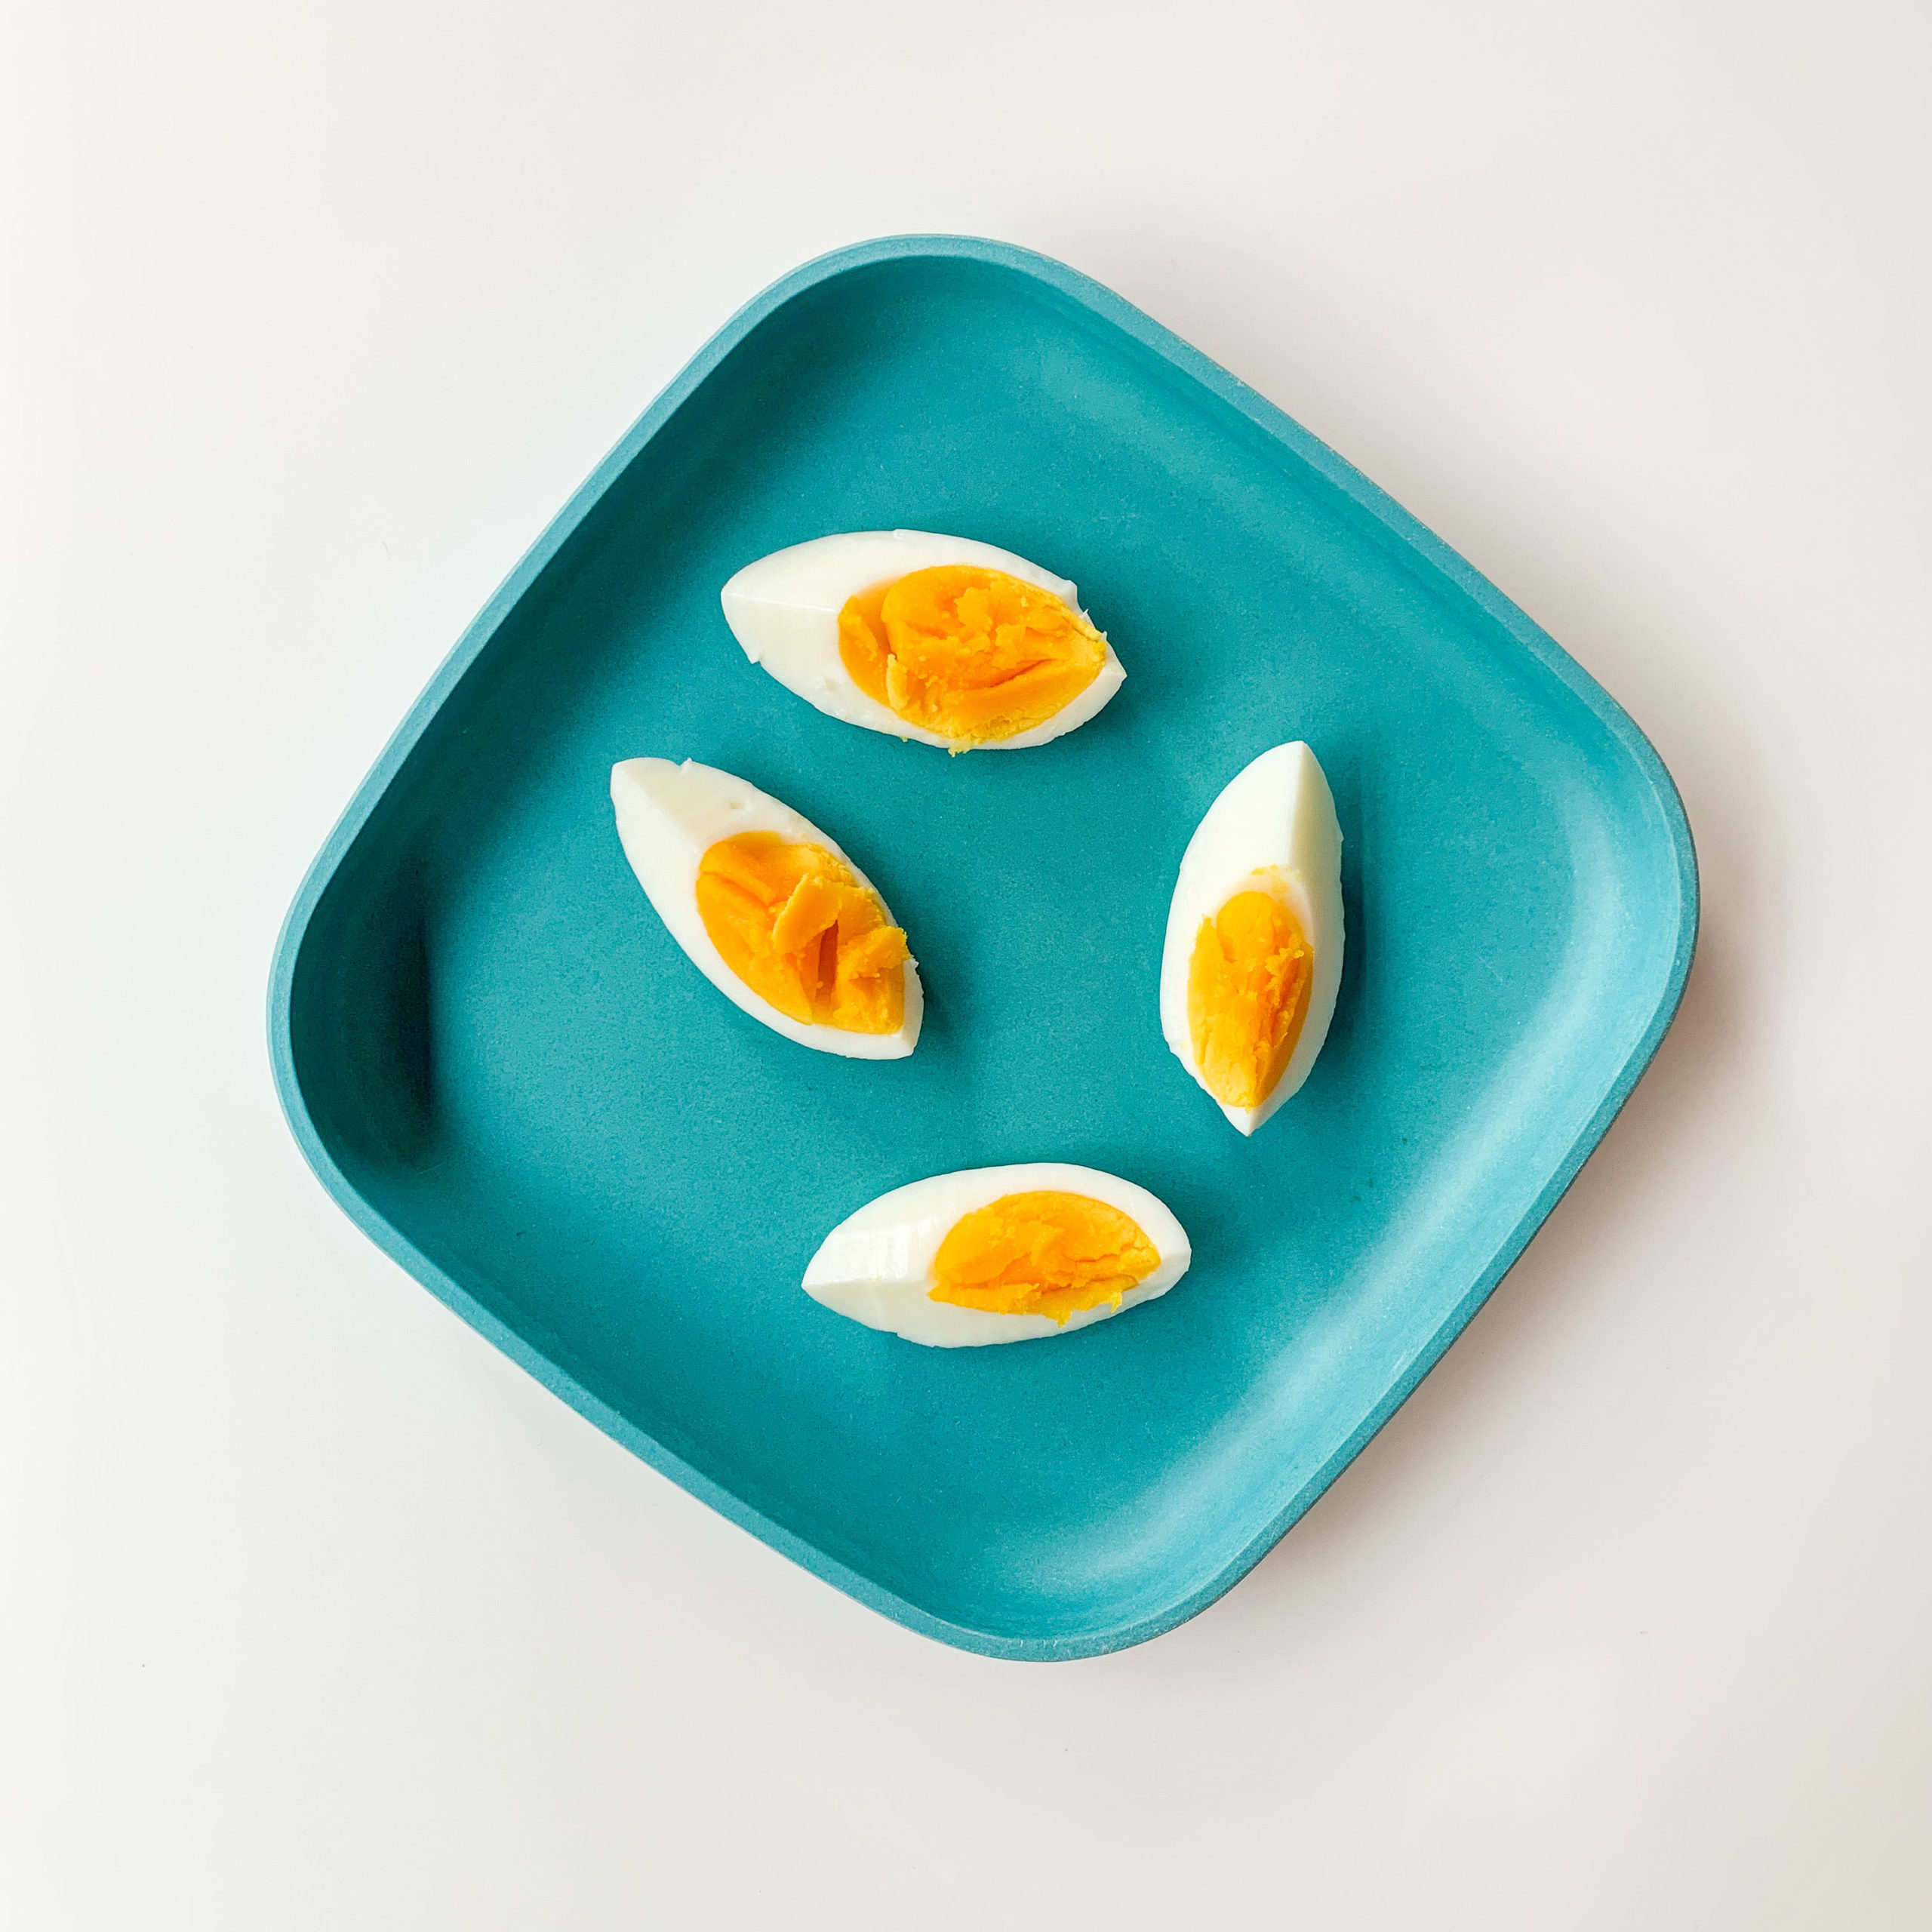 hard boiled egg wedges on a blue plate